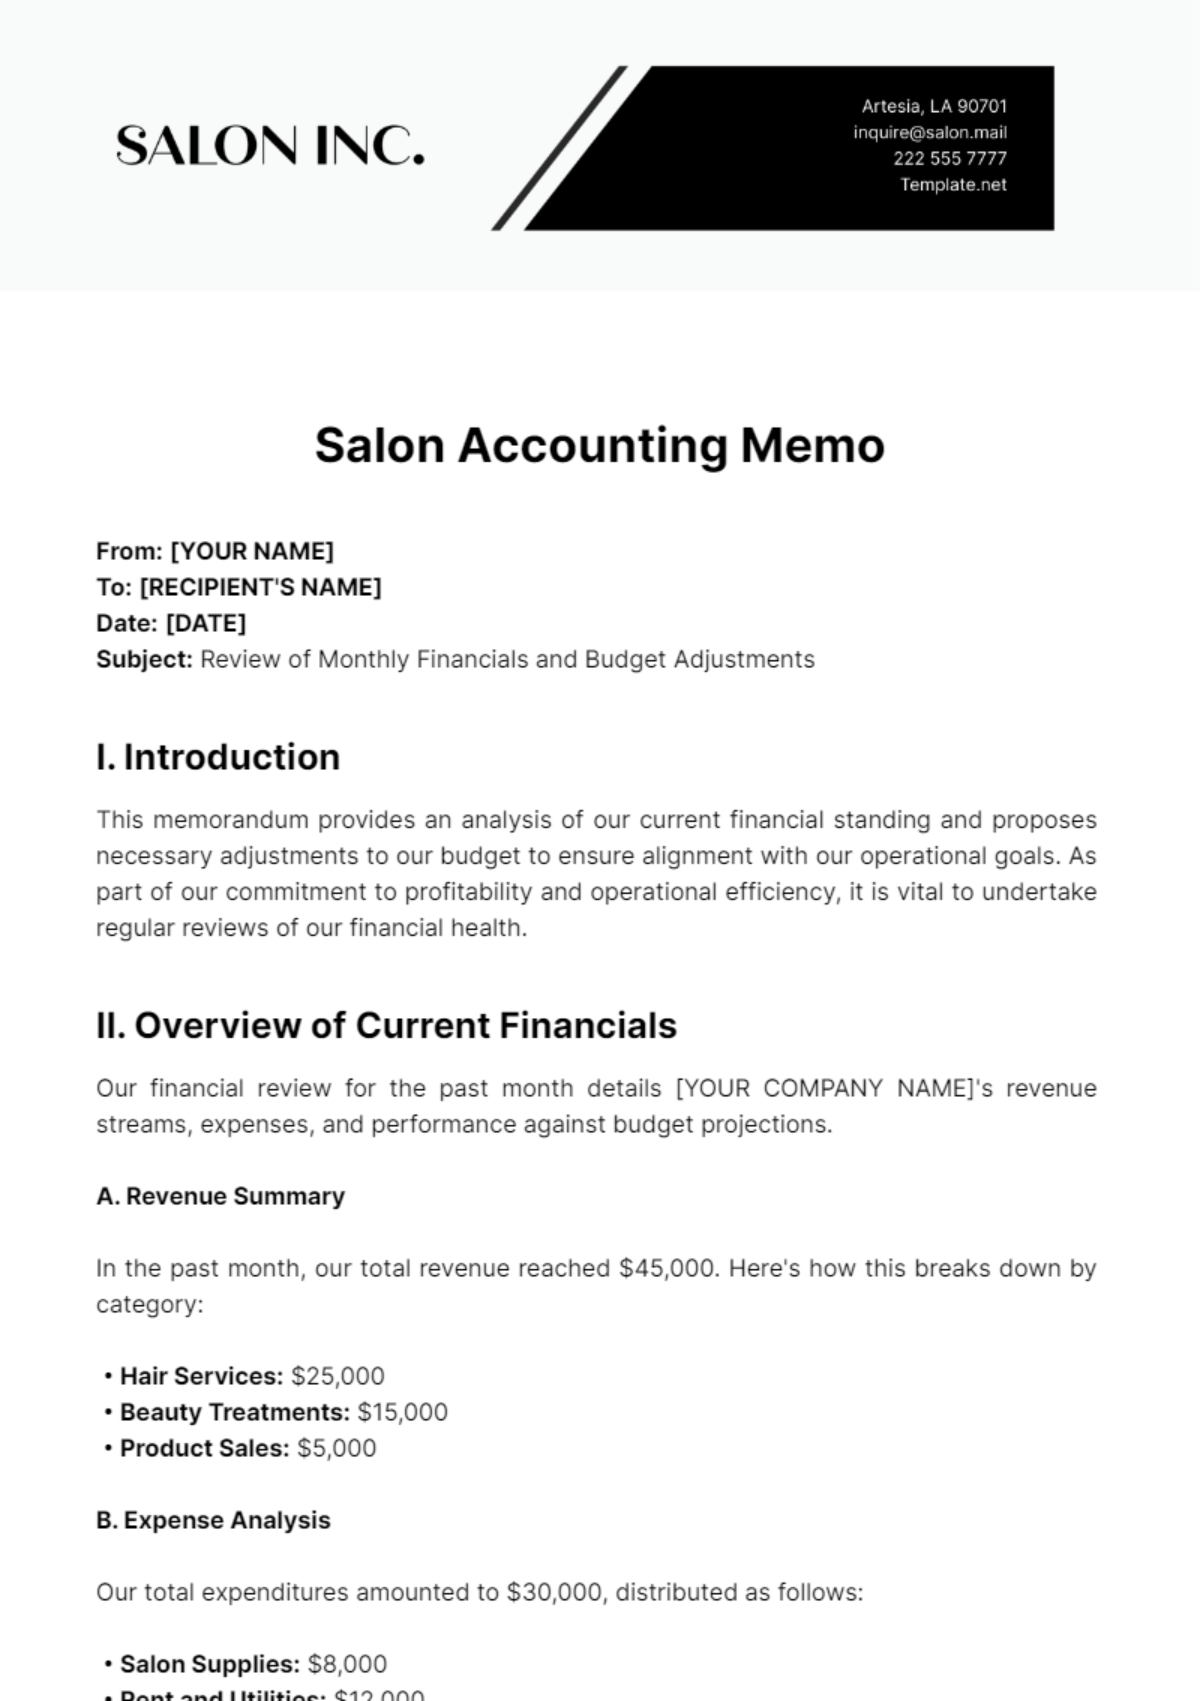 Salon Accounting Memo Template